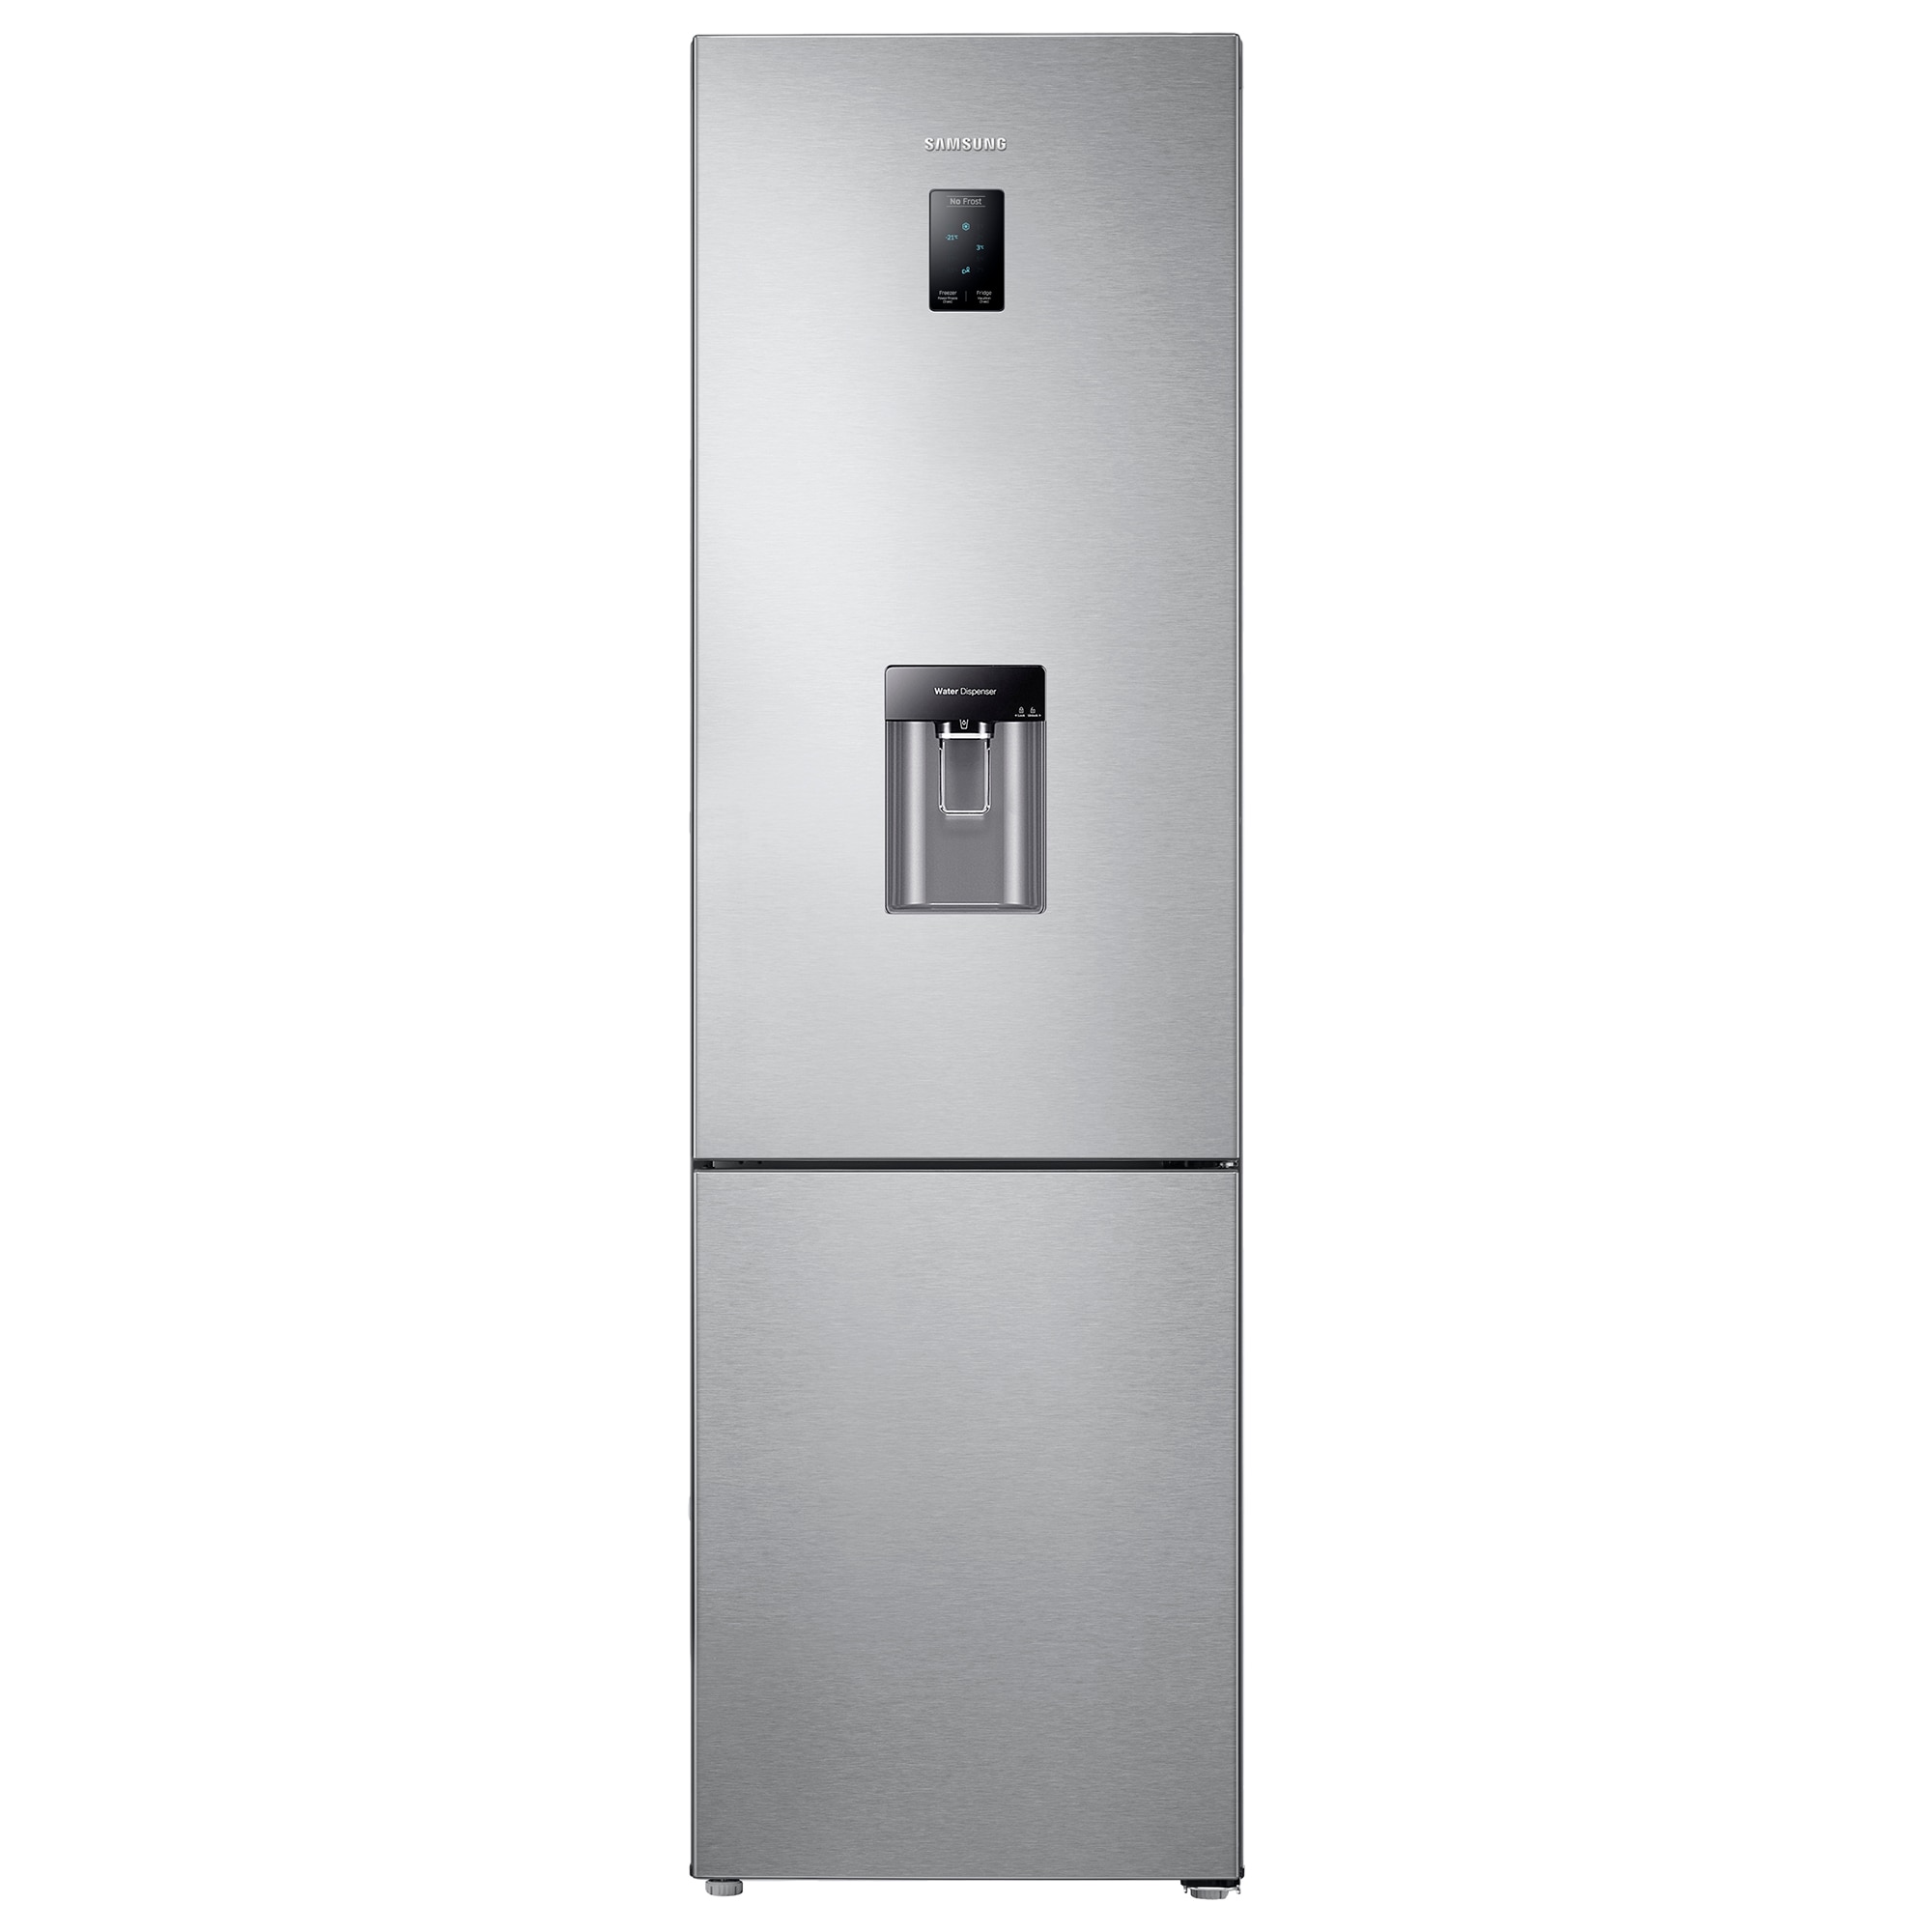 Хладилник Samsung CRB37J5800/EF с обем от 360 л.